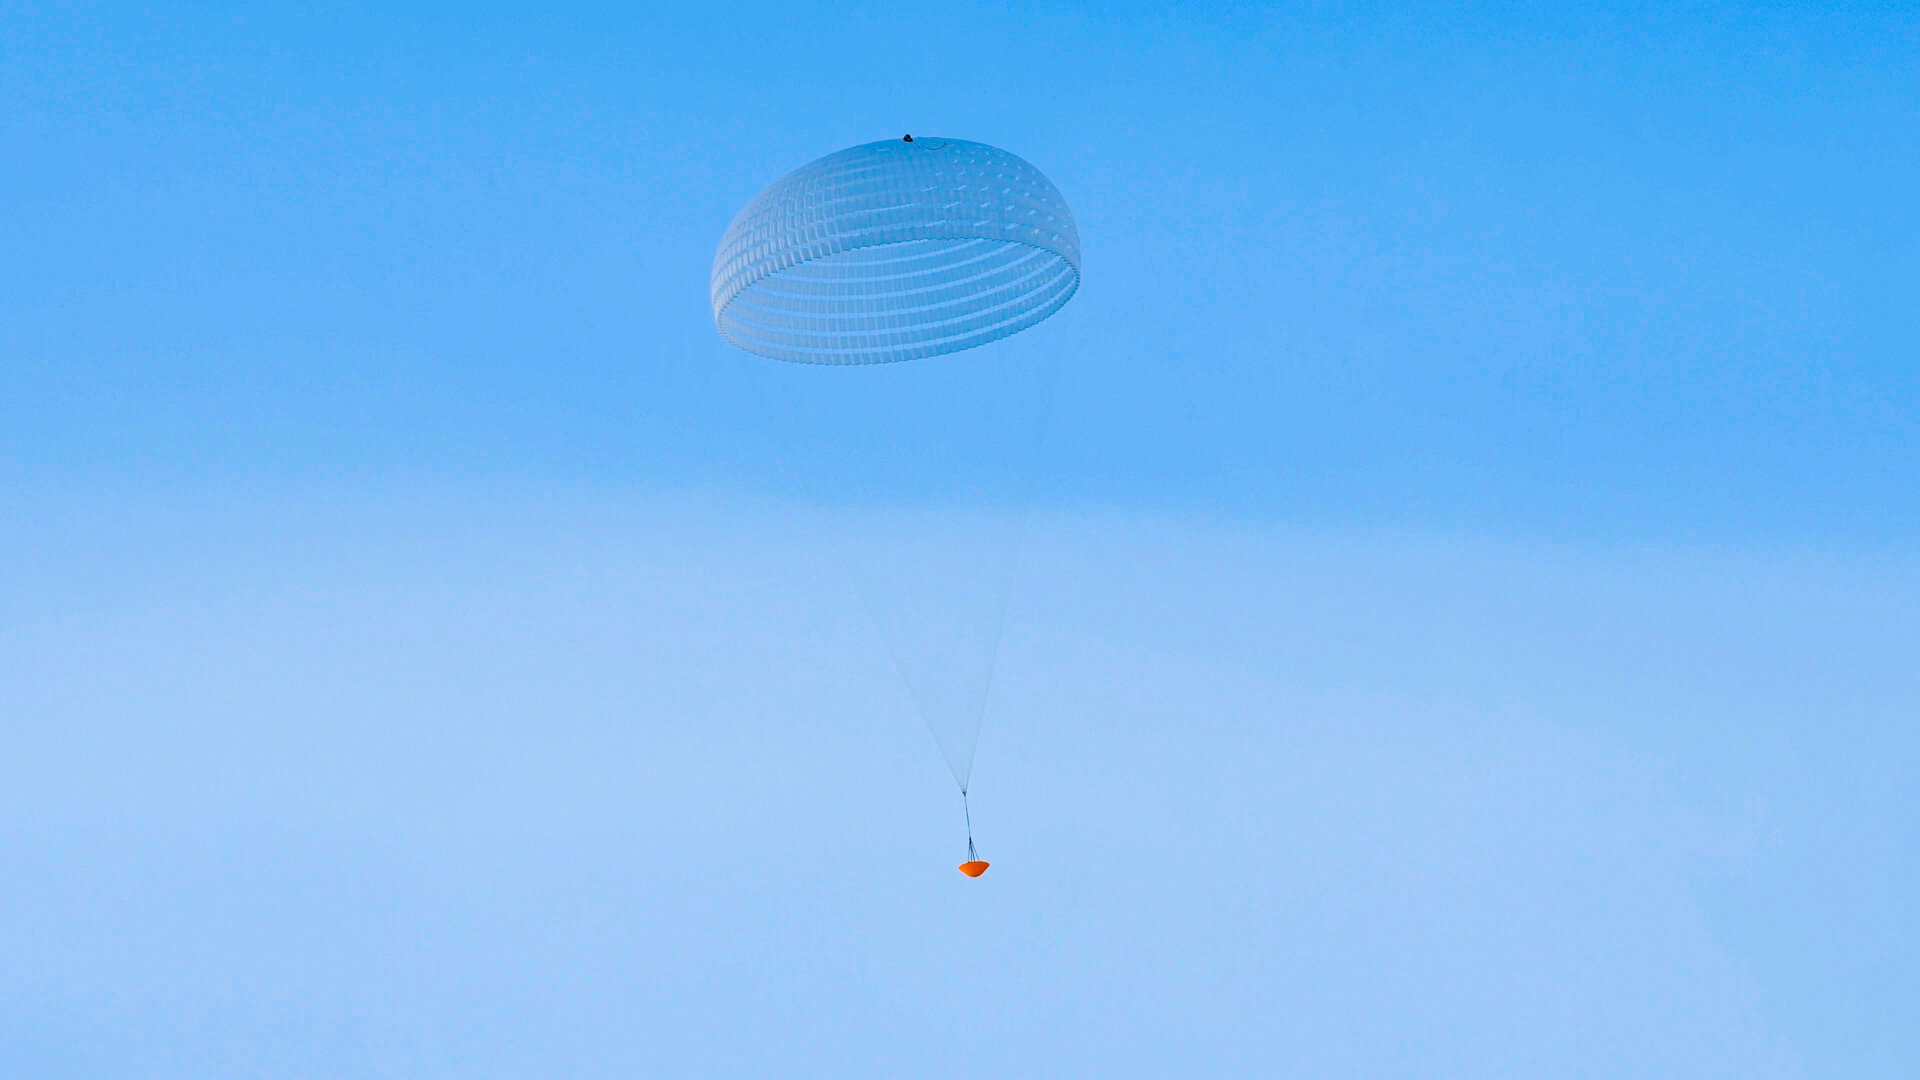 ExoMars parachute inflation